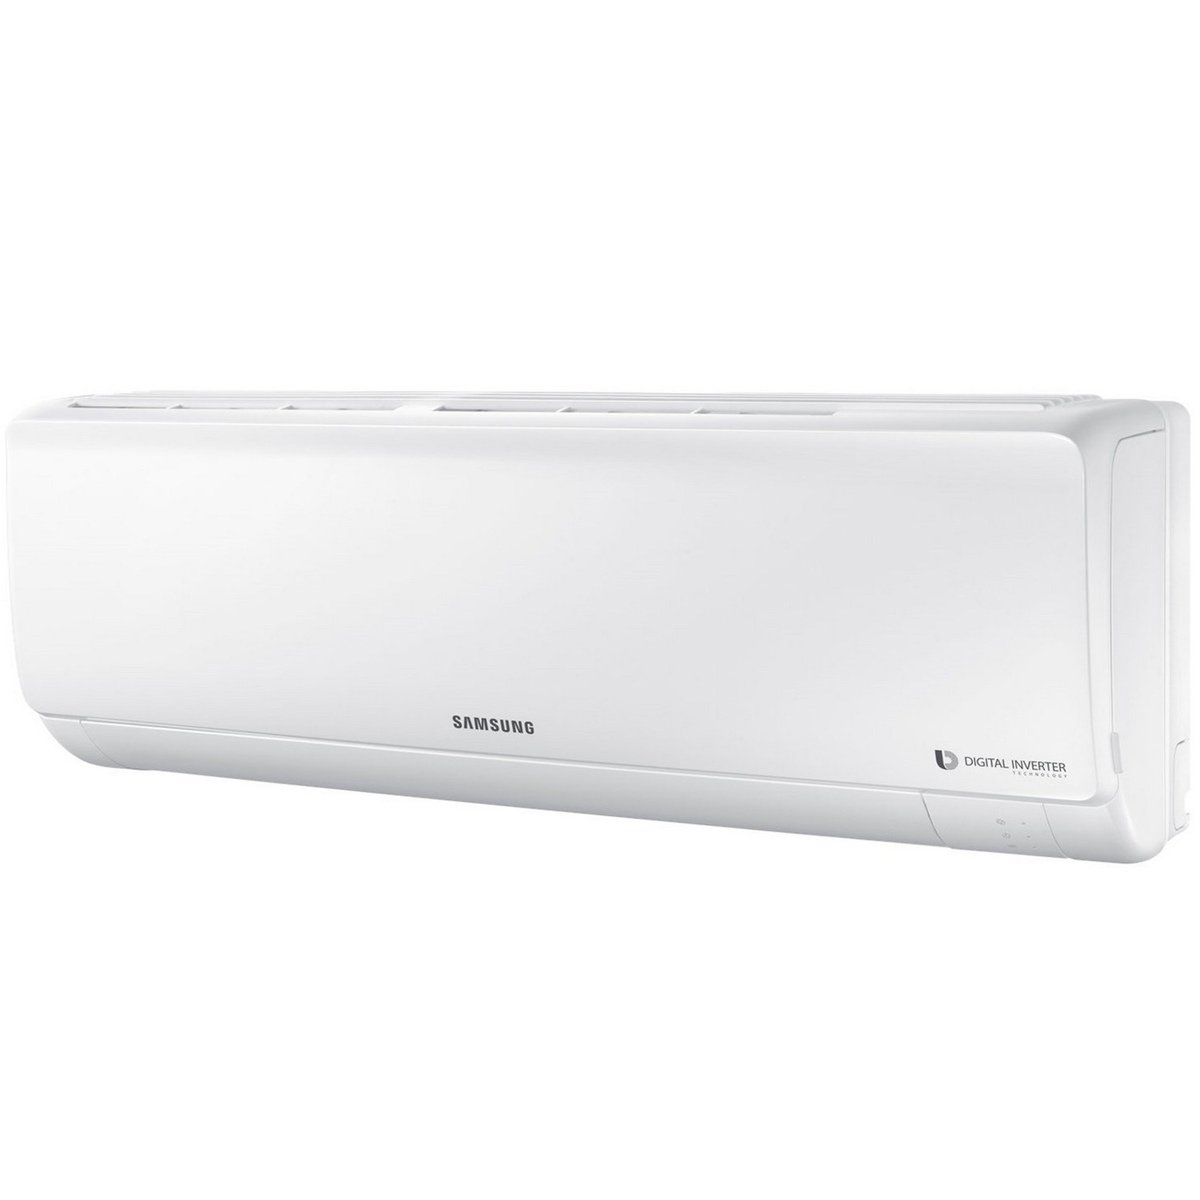 Samsung Split Air Conditioner with Digital Inverter Technology AR18NVFHGWK 1.5Ton